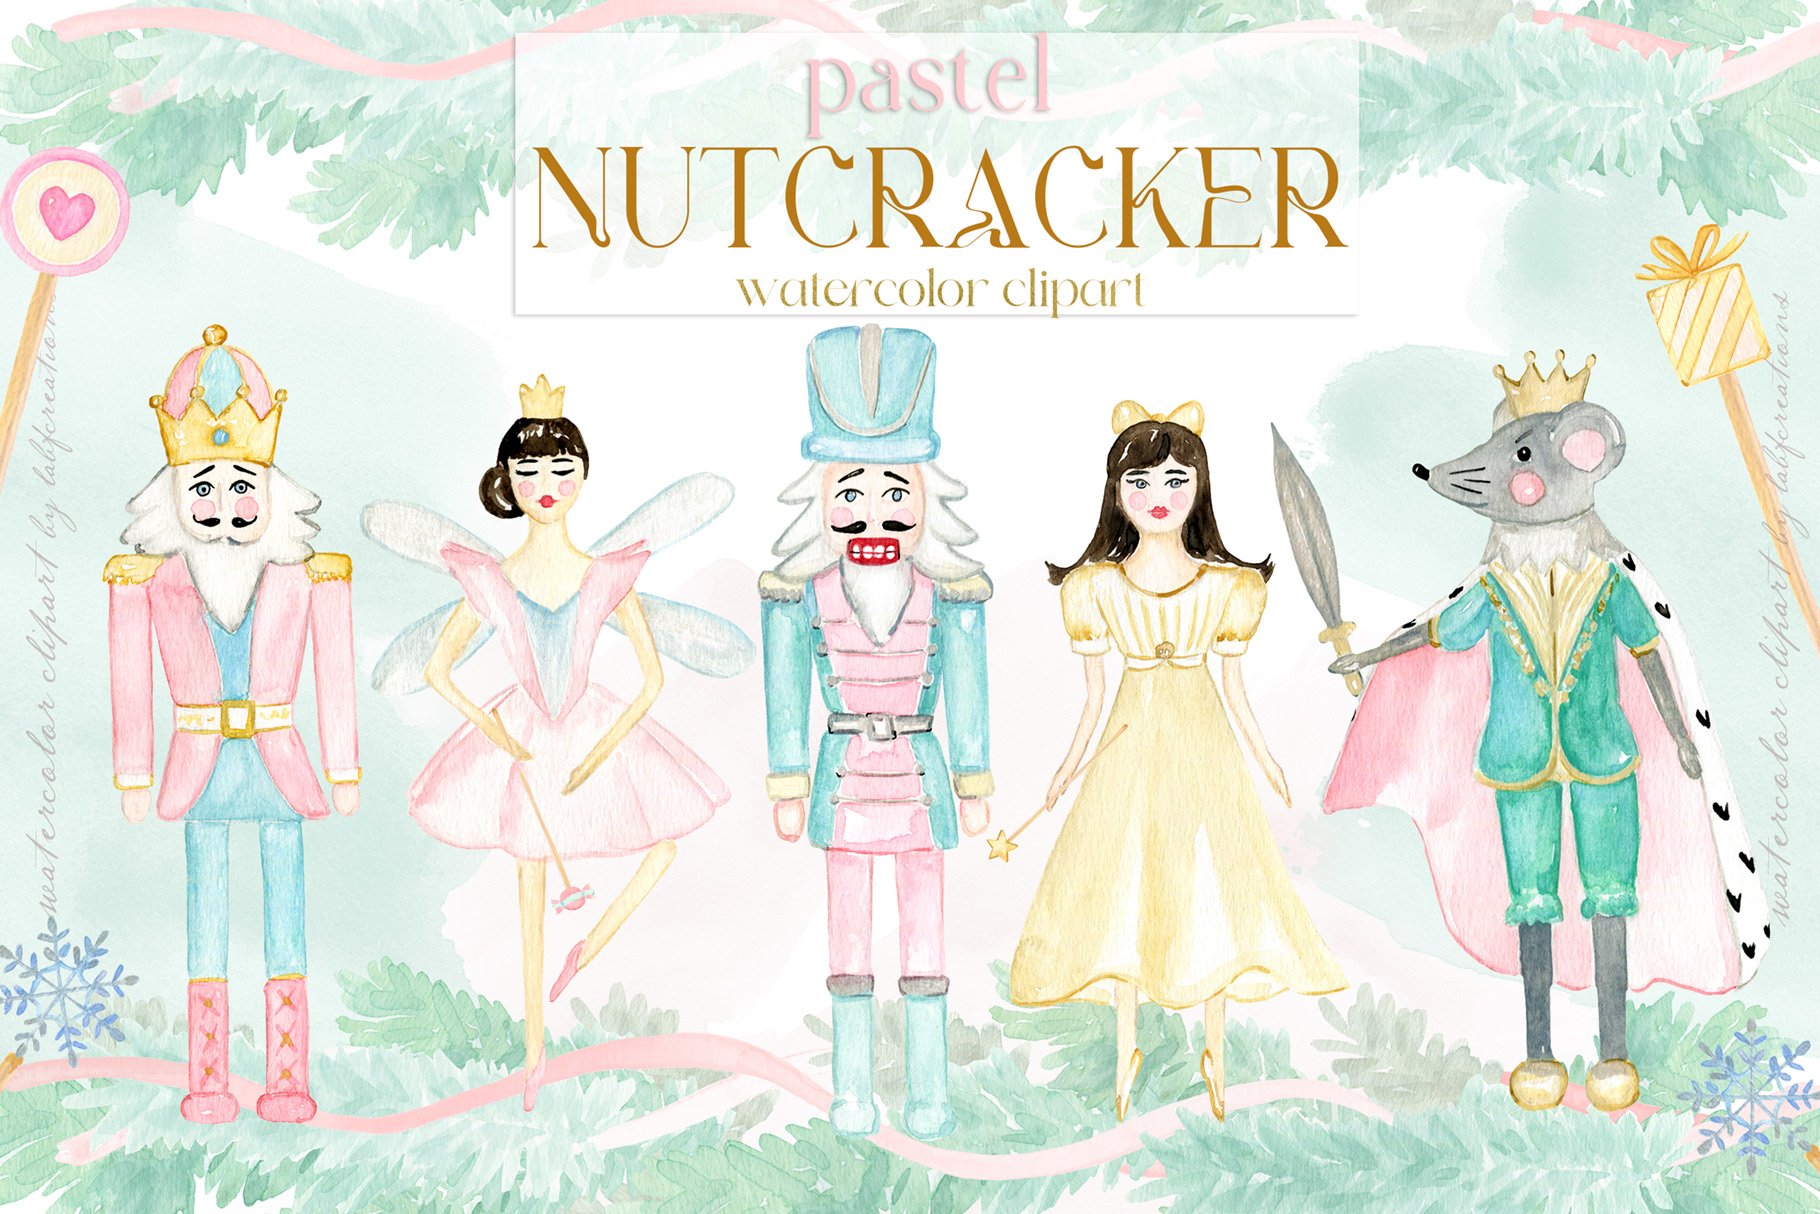 nutcracker ballet characters paintings